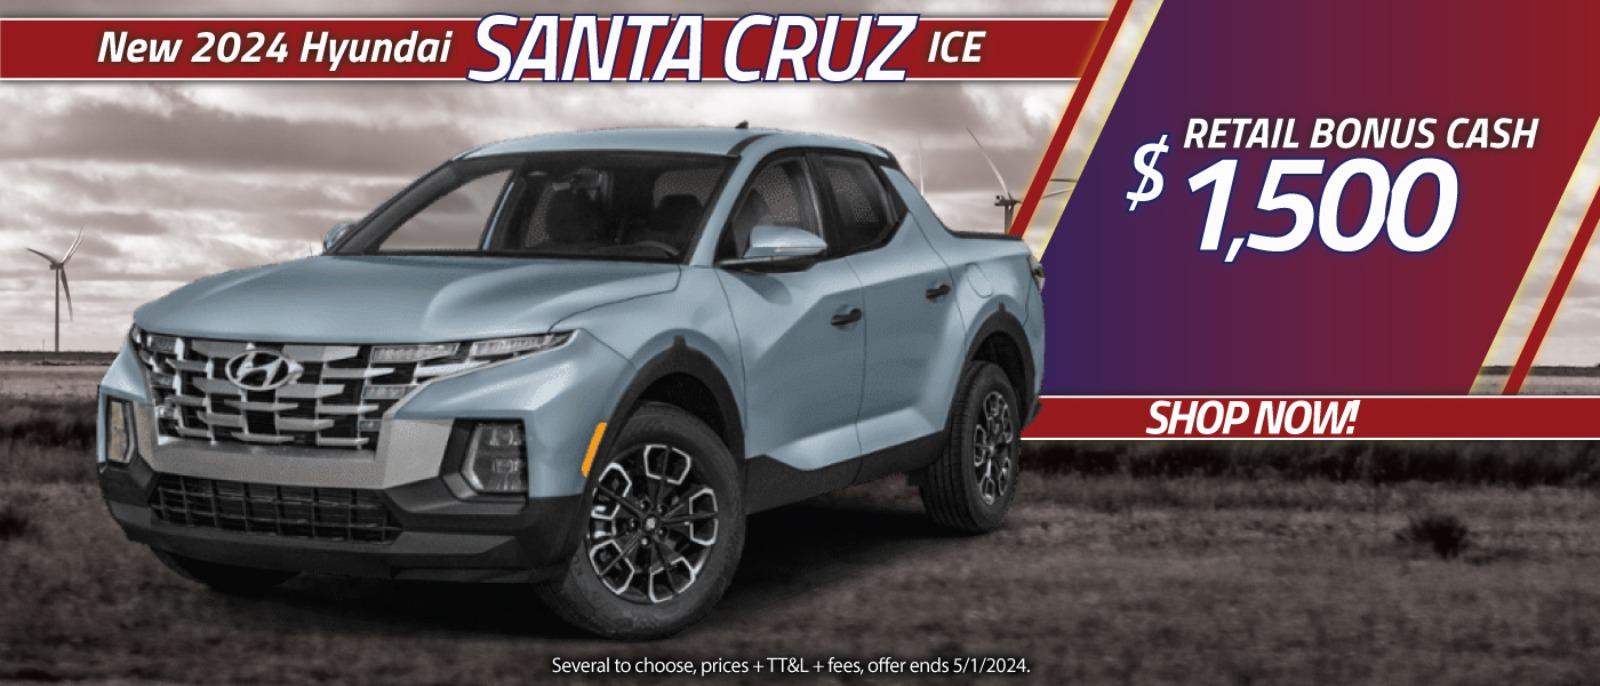 New 2024 Hyundai Santa Cruz